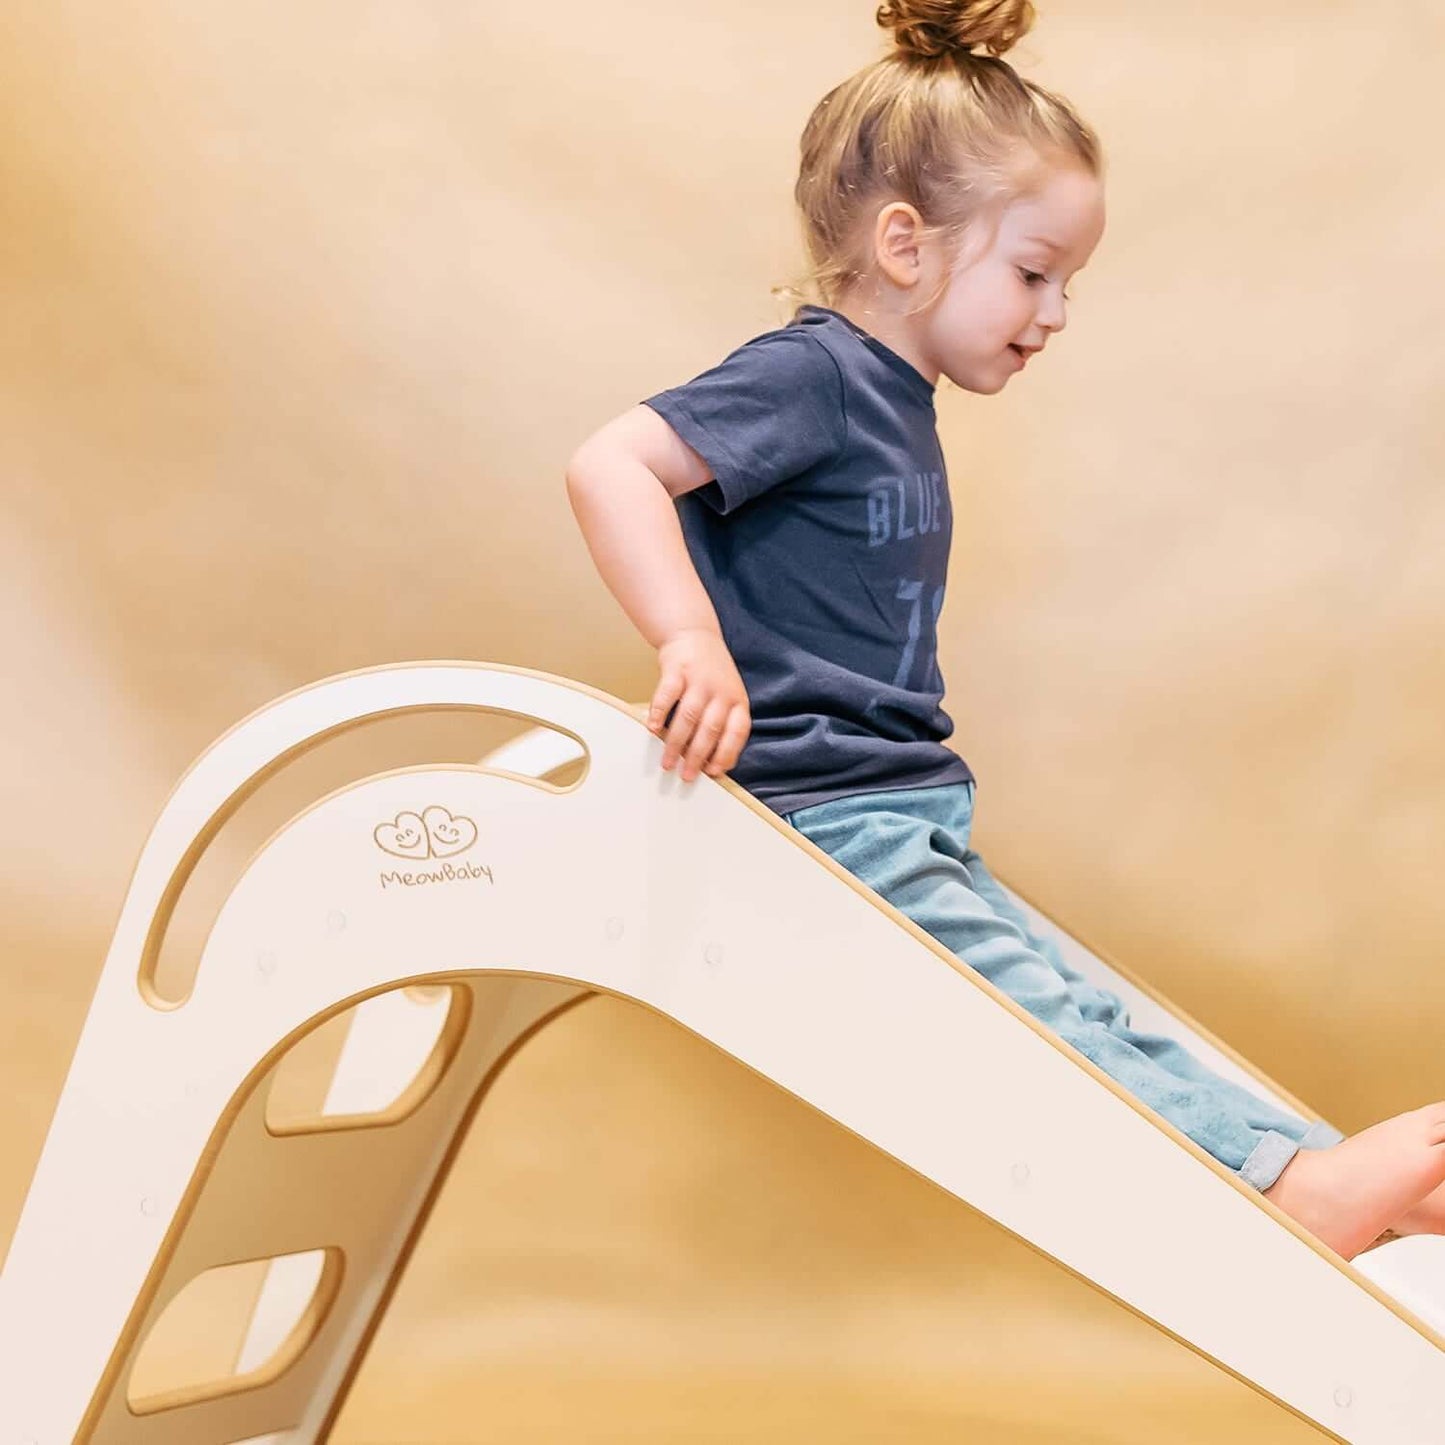 MeowBaby® Montessori slide "Junior" made of wood for small children